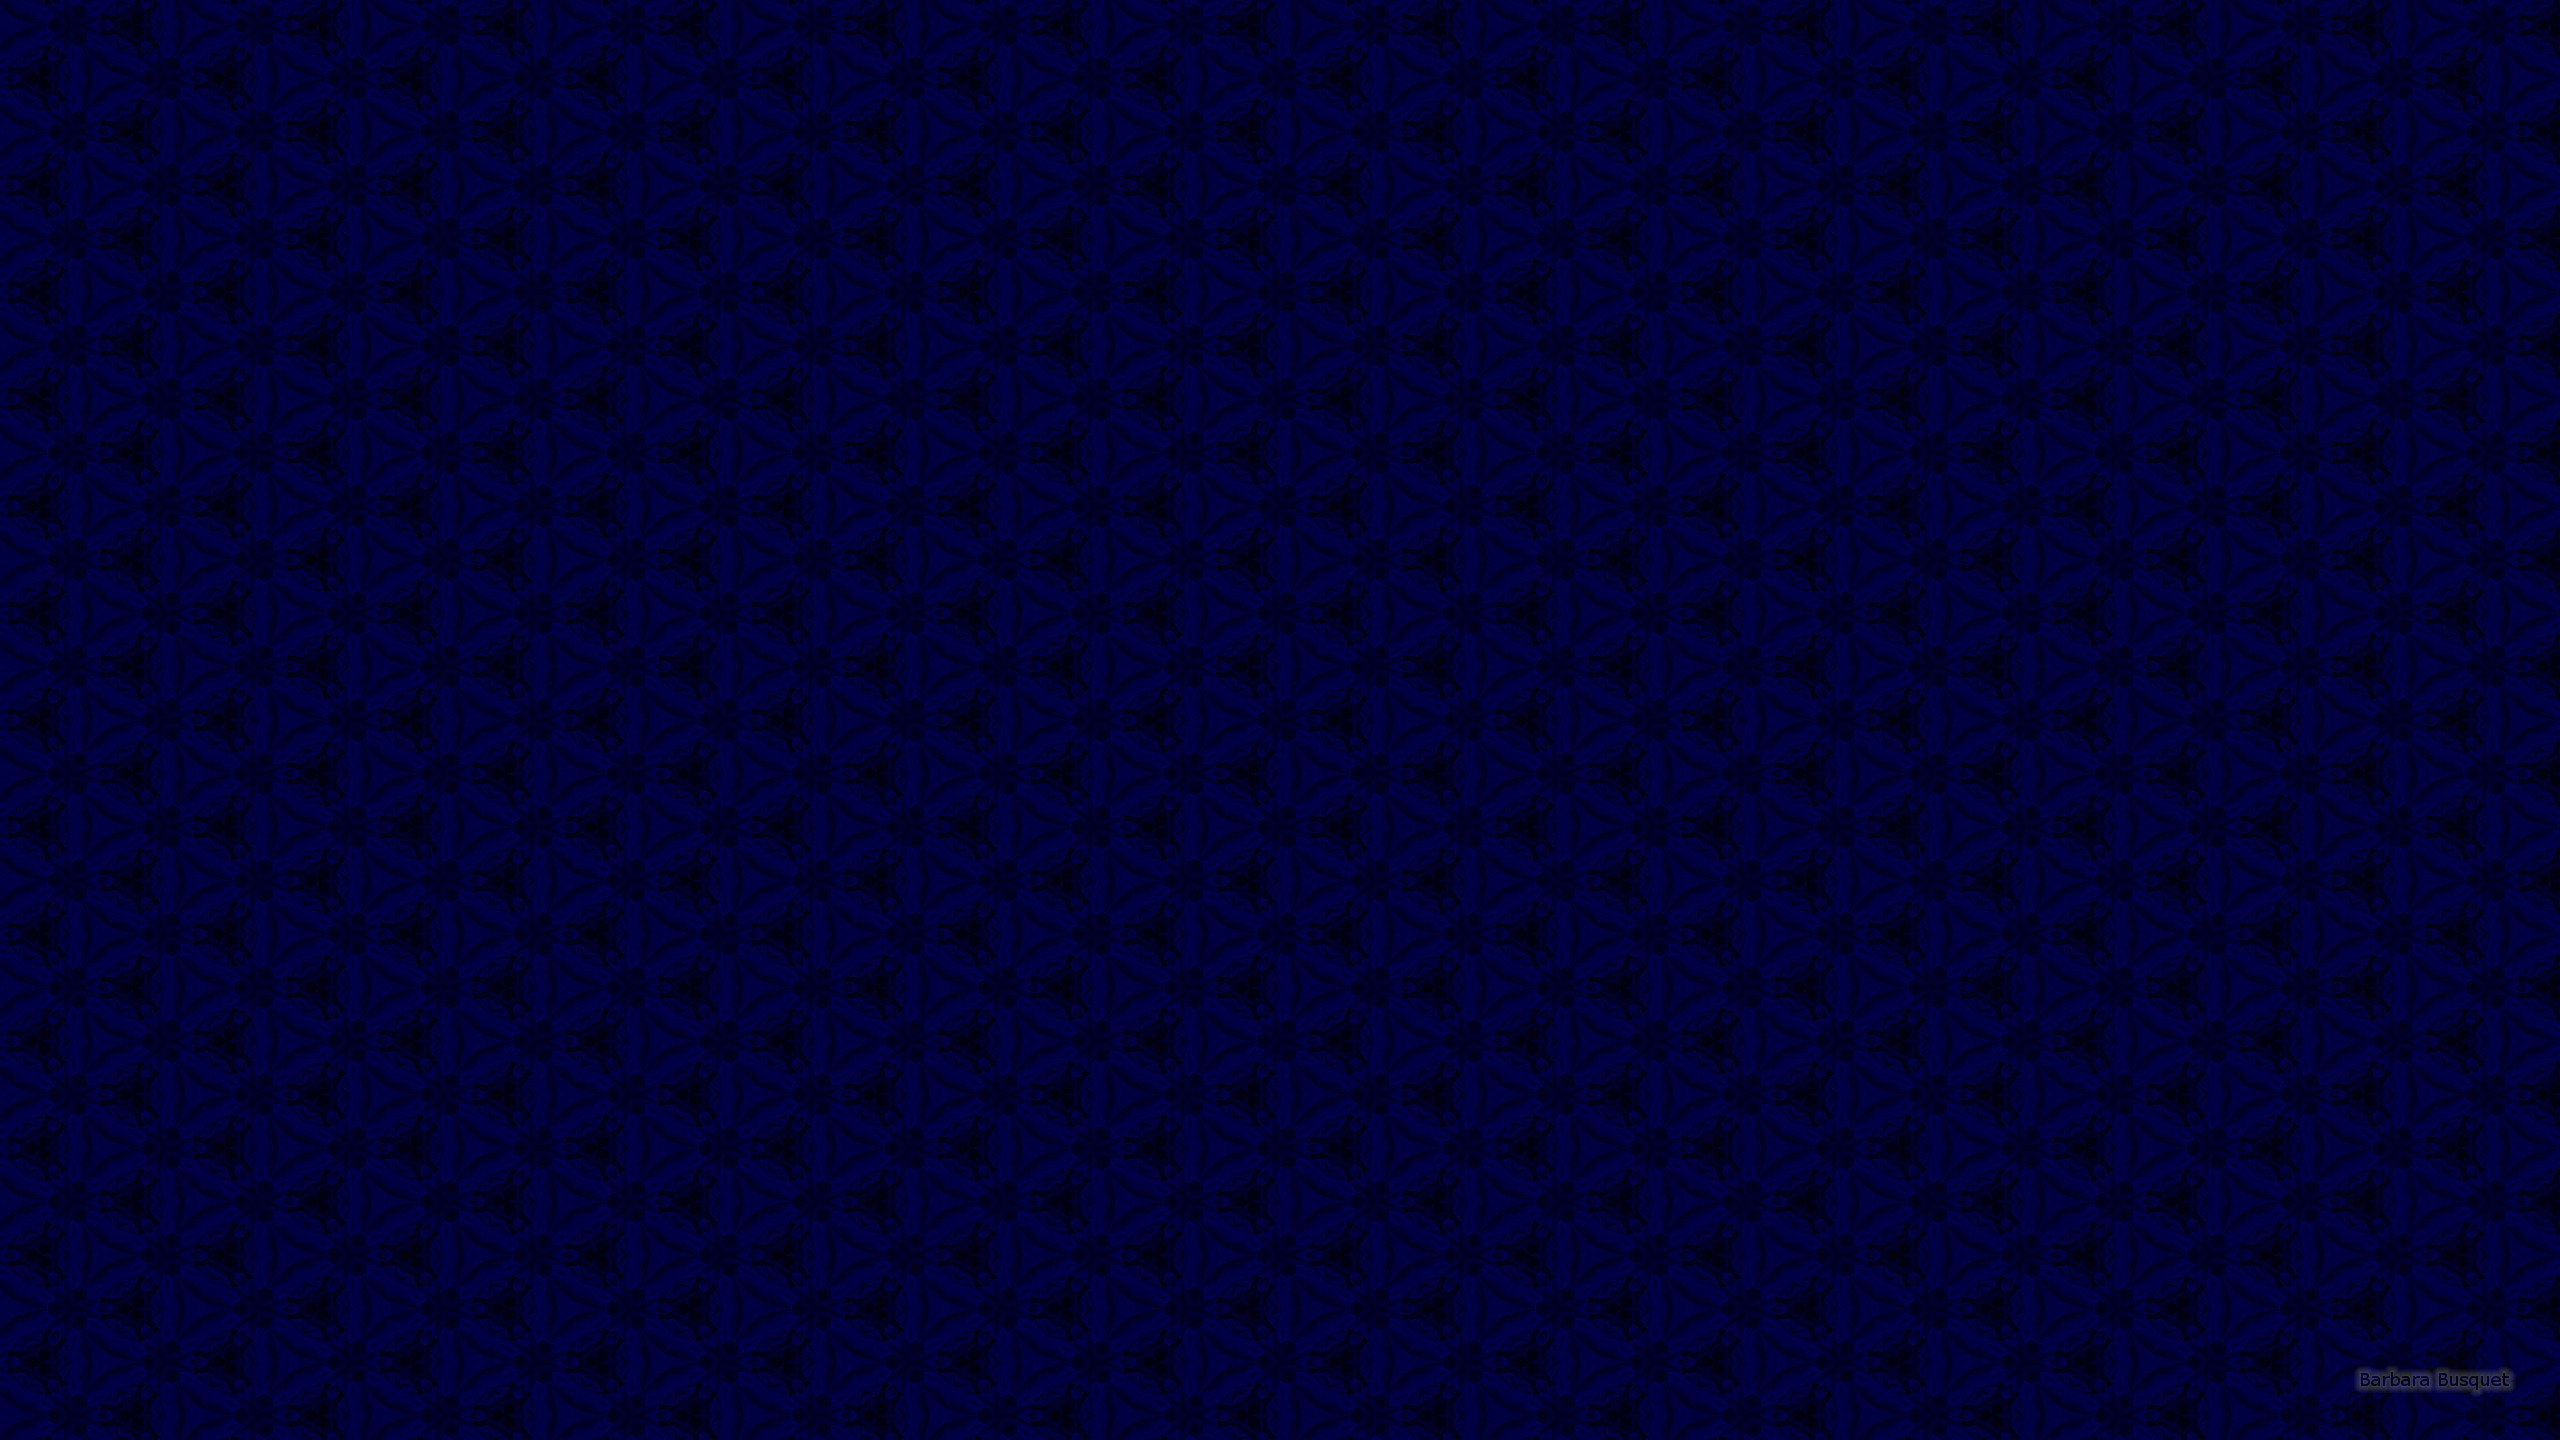 2560x1440 PreviousNext. Previous Image Next Image. dark blue wallpaper ...